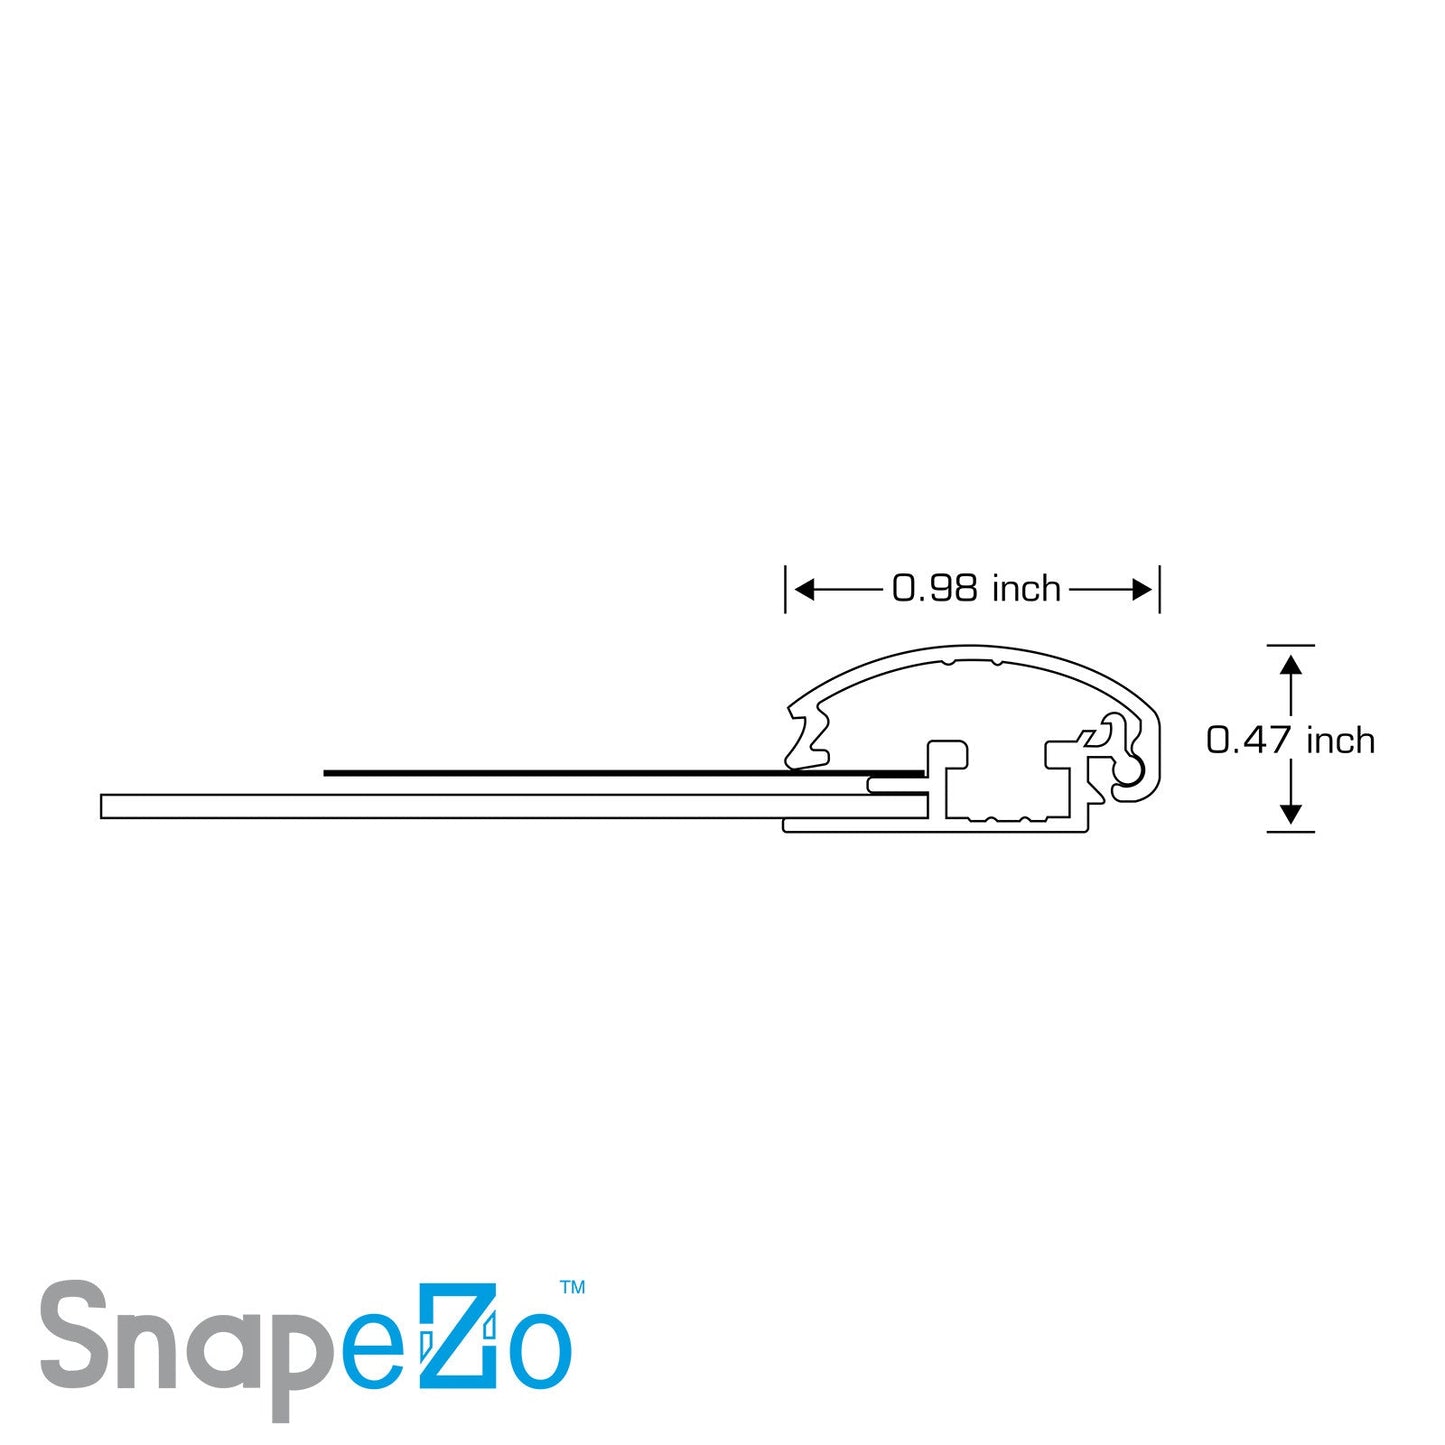 8x10 Black SnapeZo® Snap Frame - 1" Profile